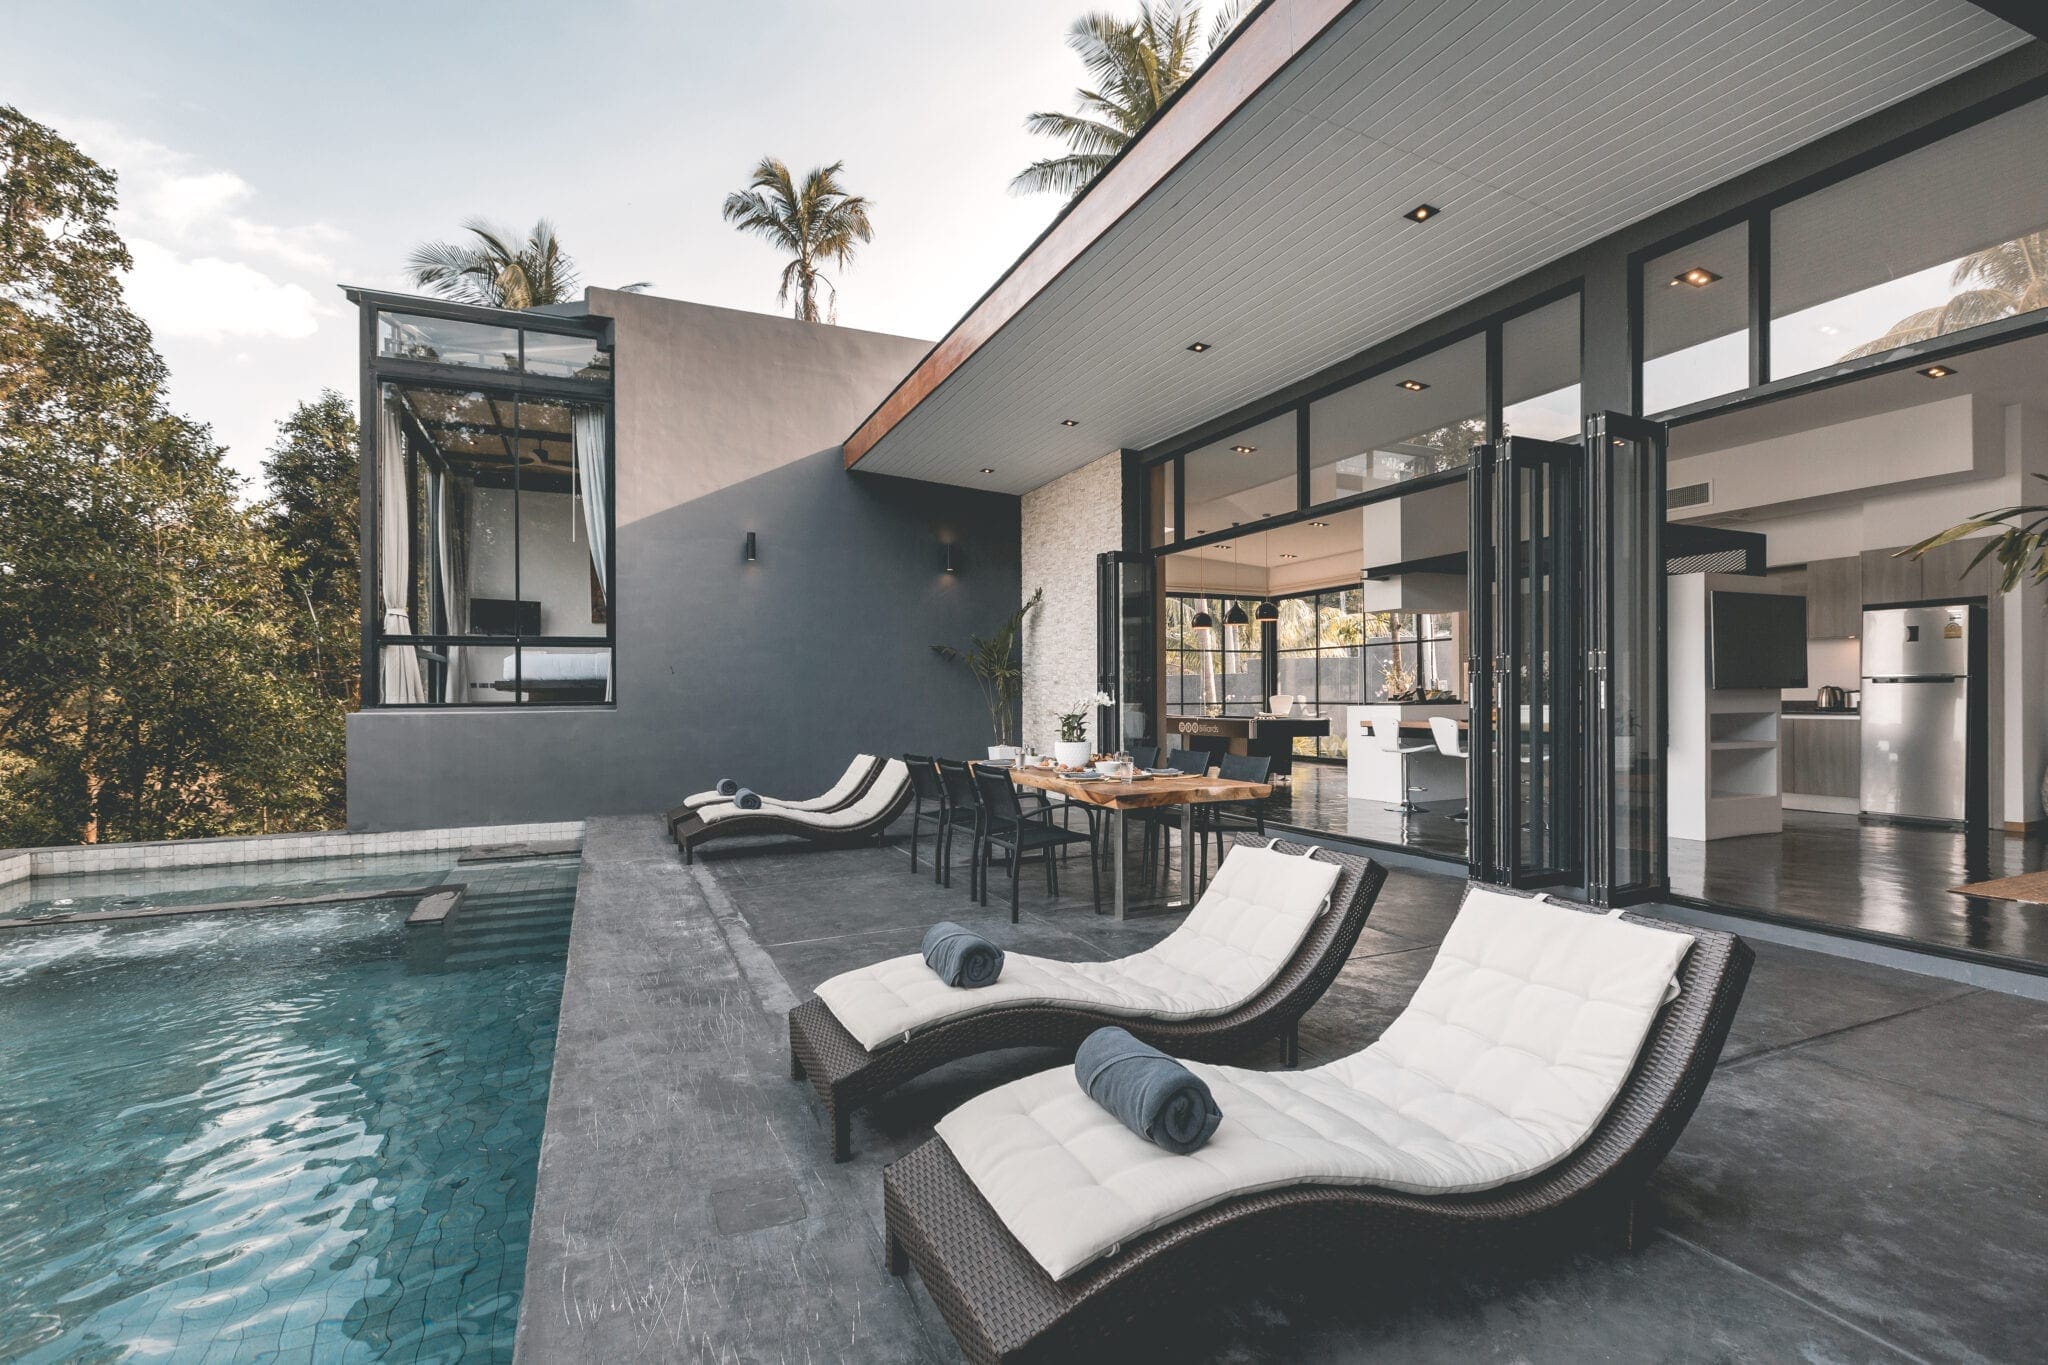 Thaise, Airbnb Finds: Thaise over-de-top villa met million dollar view